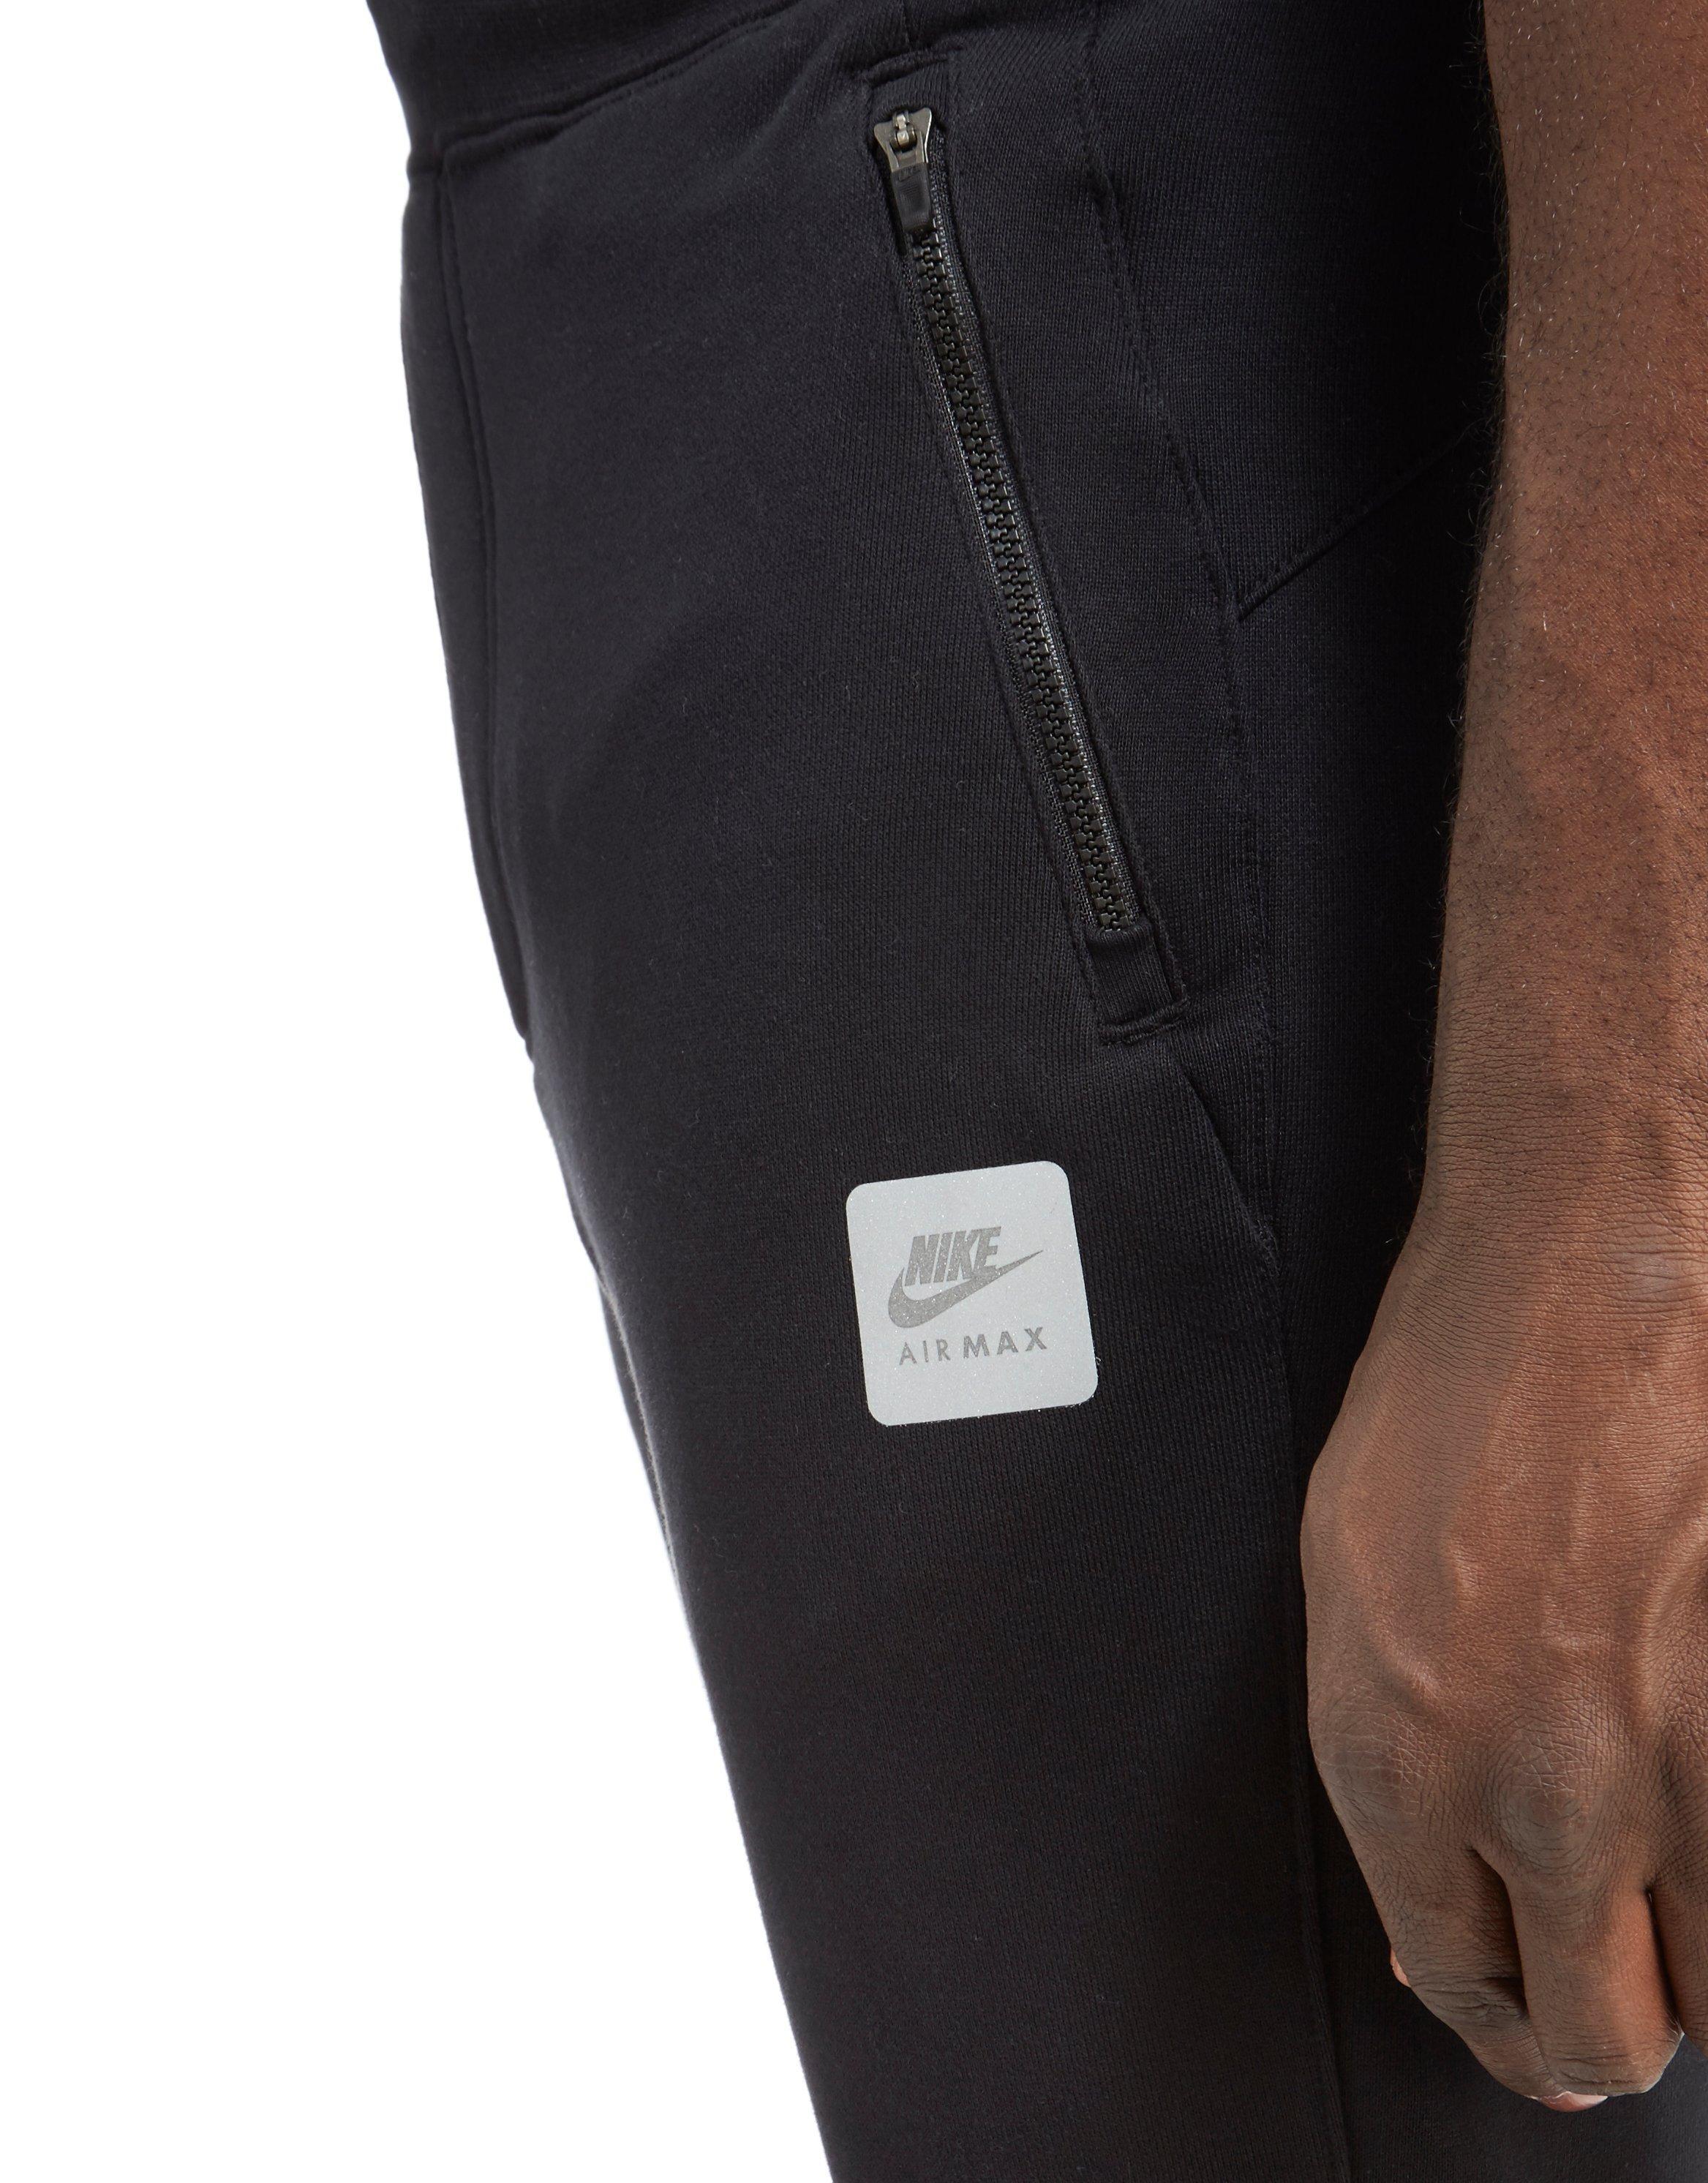 Lyst - Nike Air Max Ft Pants in Black for Men